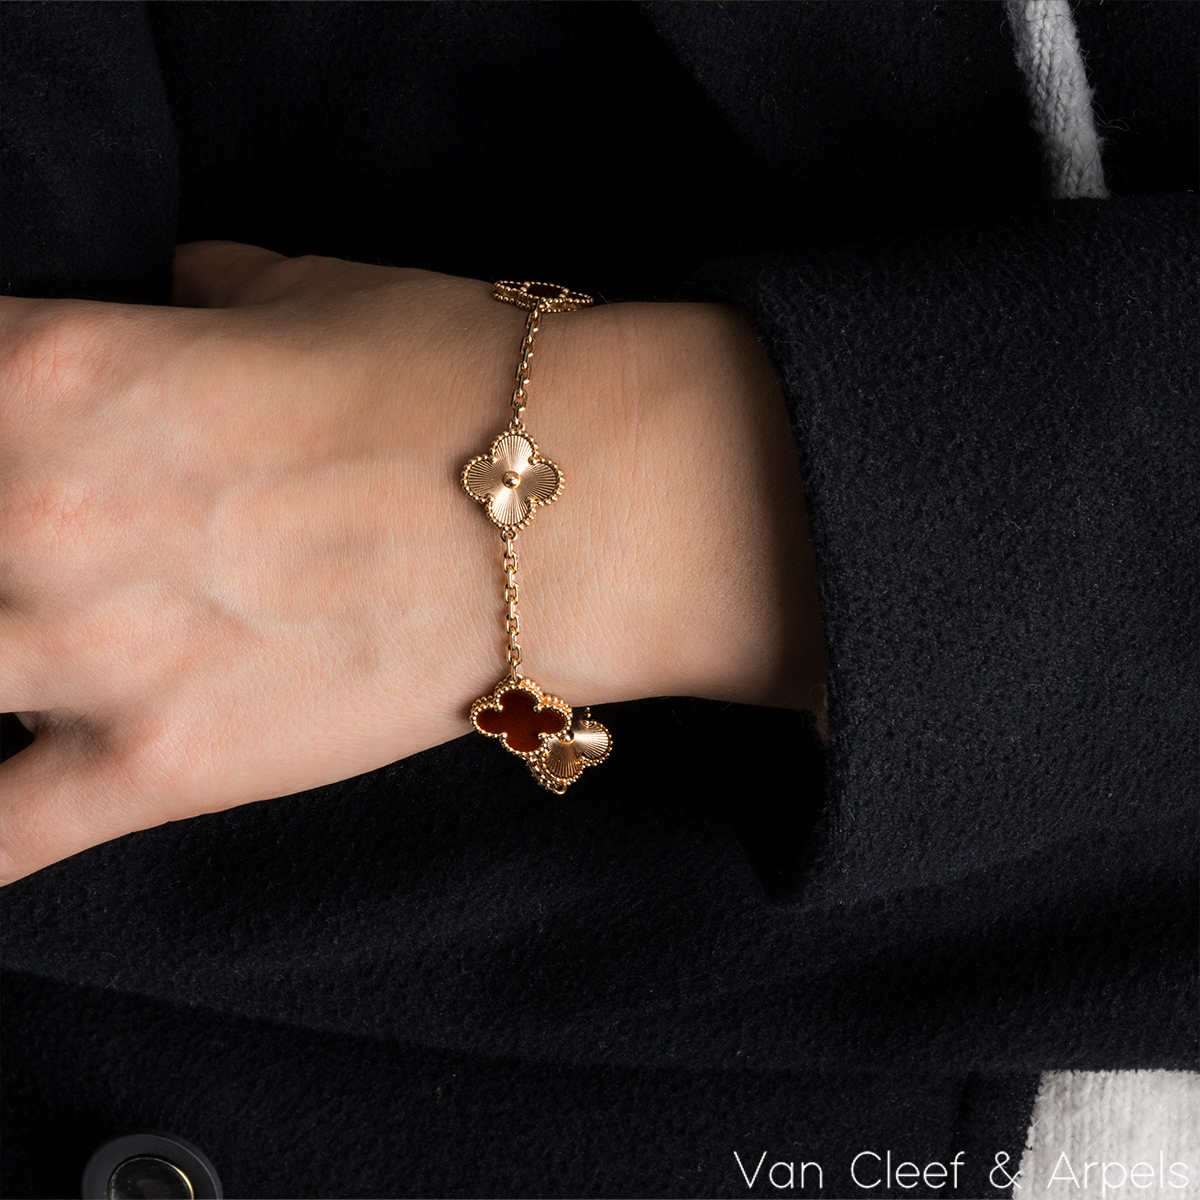 Van Cleef & Arpels Vintage Alhambra Guilloché Bracelet Review